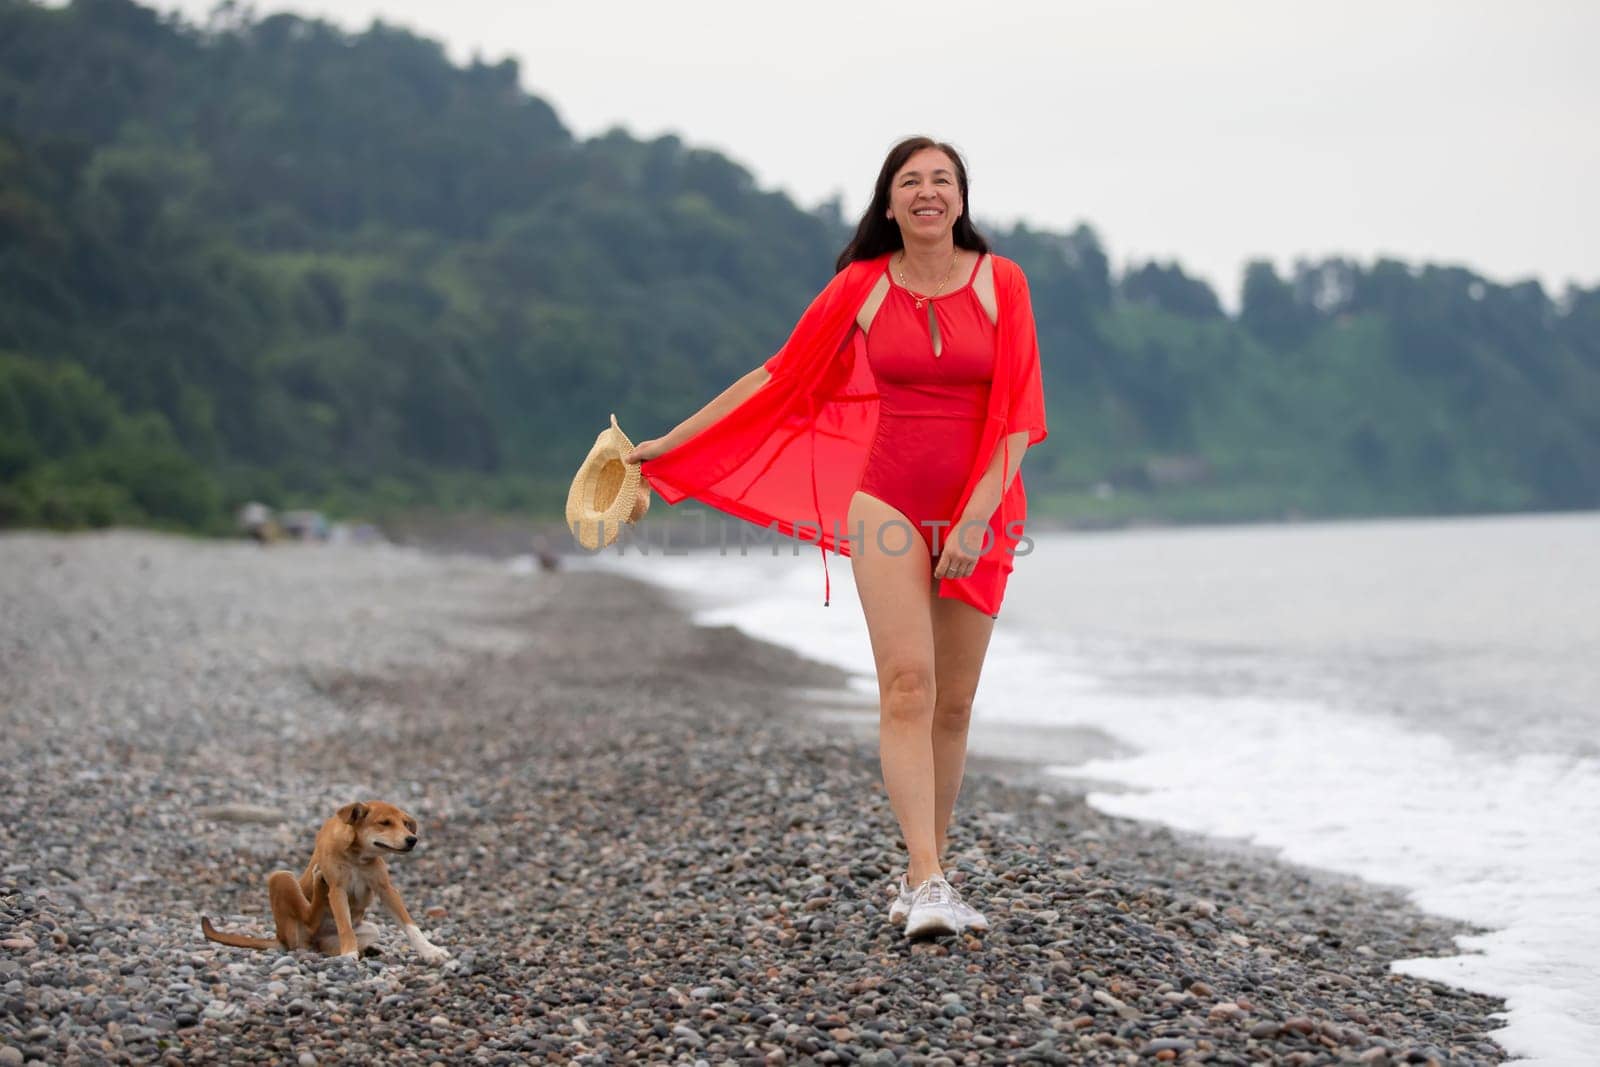 An elderly woman walks her dog along a pebbly beach.